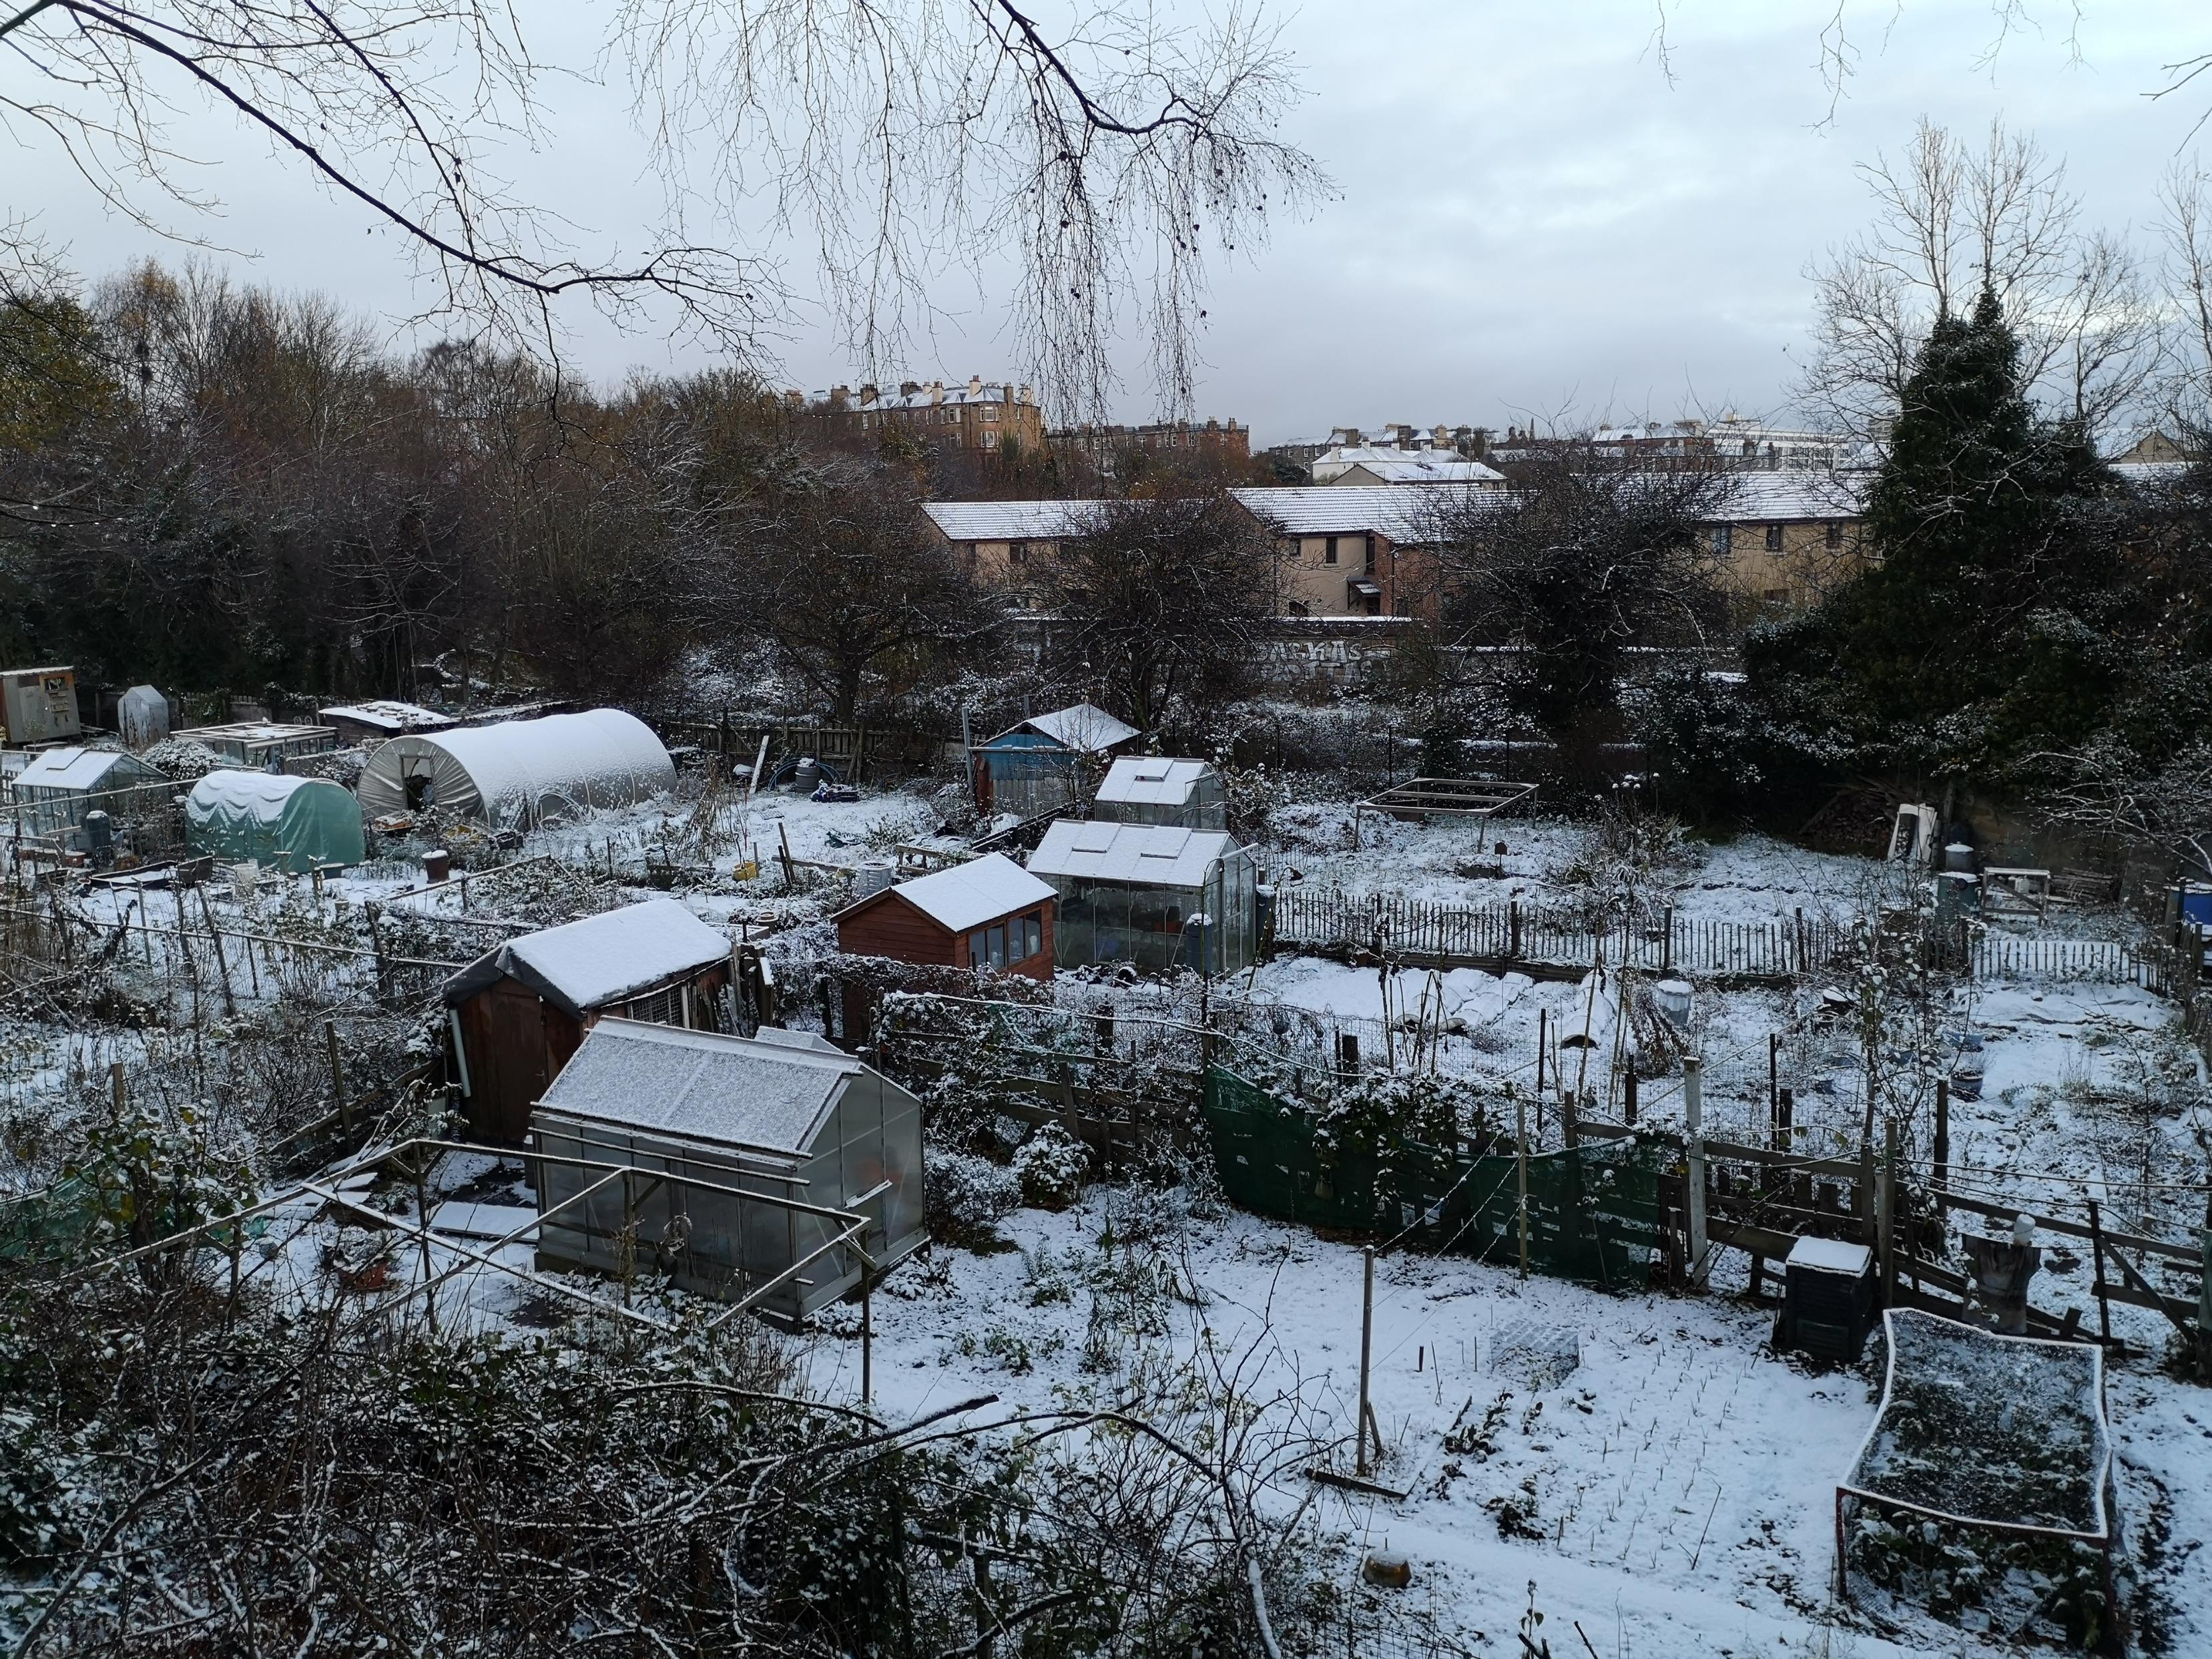 snowy allotments near flats